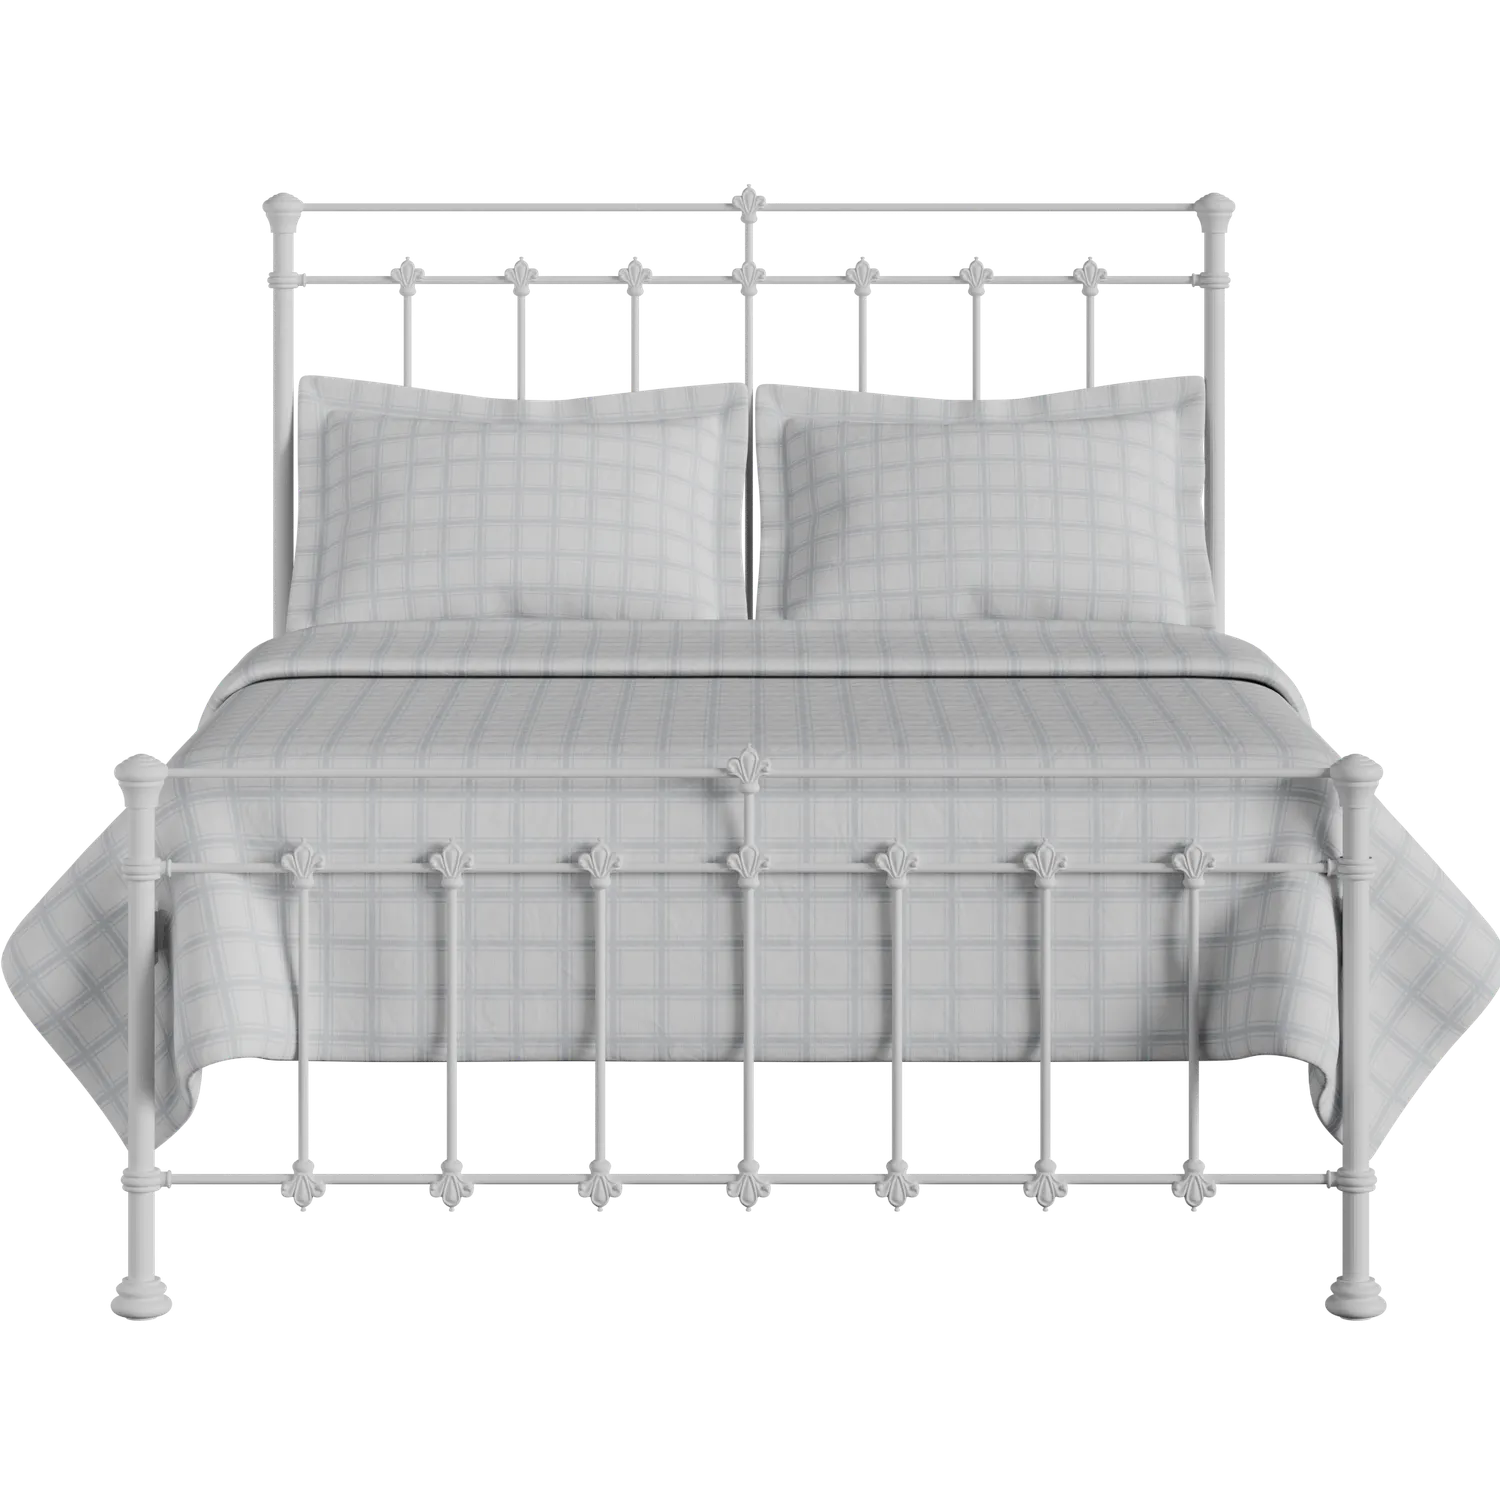 Edwardian iron/metal bed in white